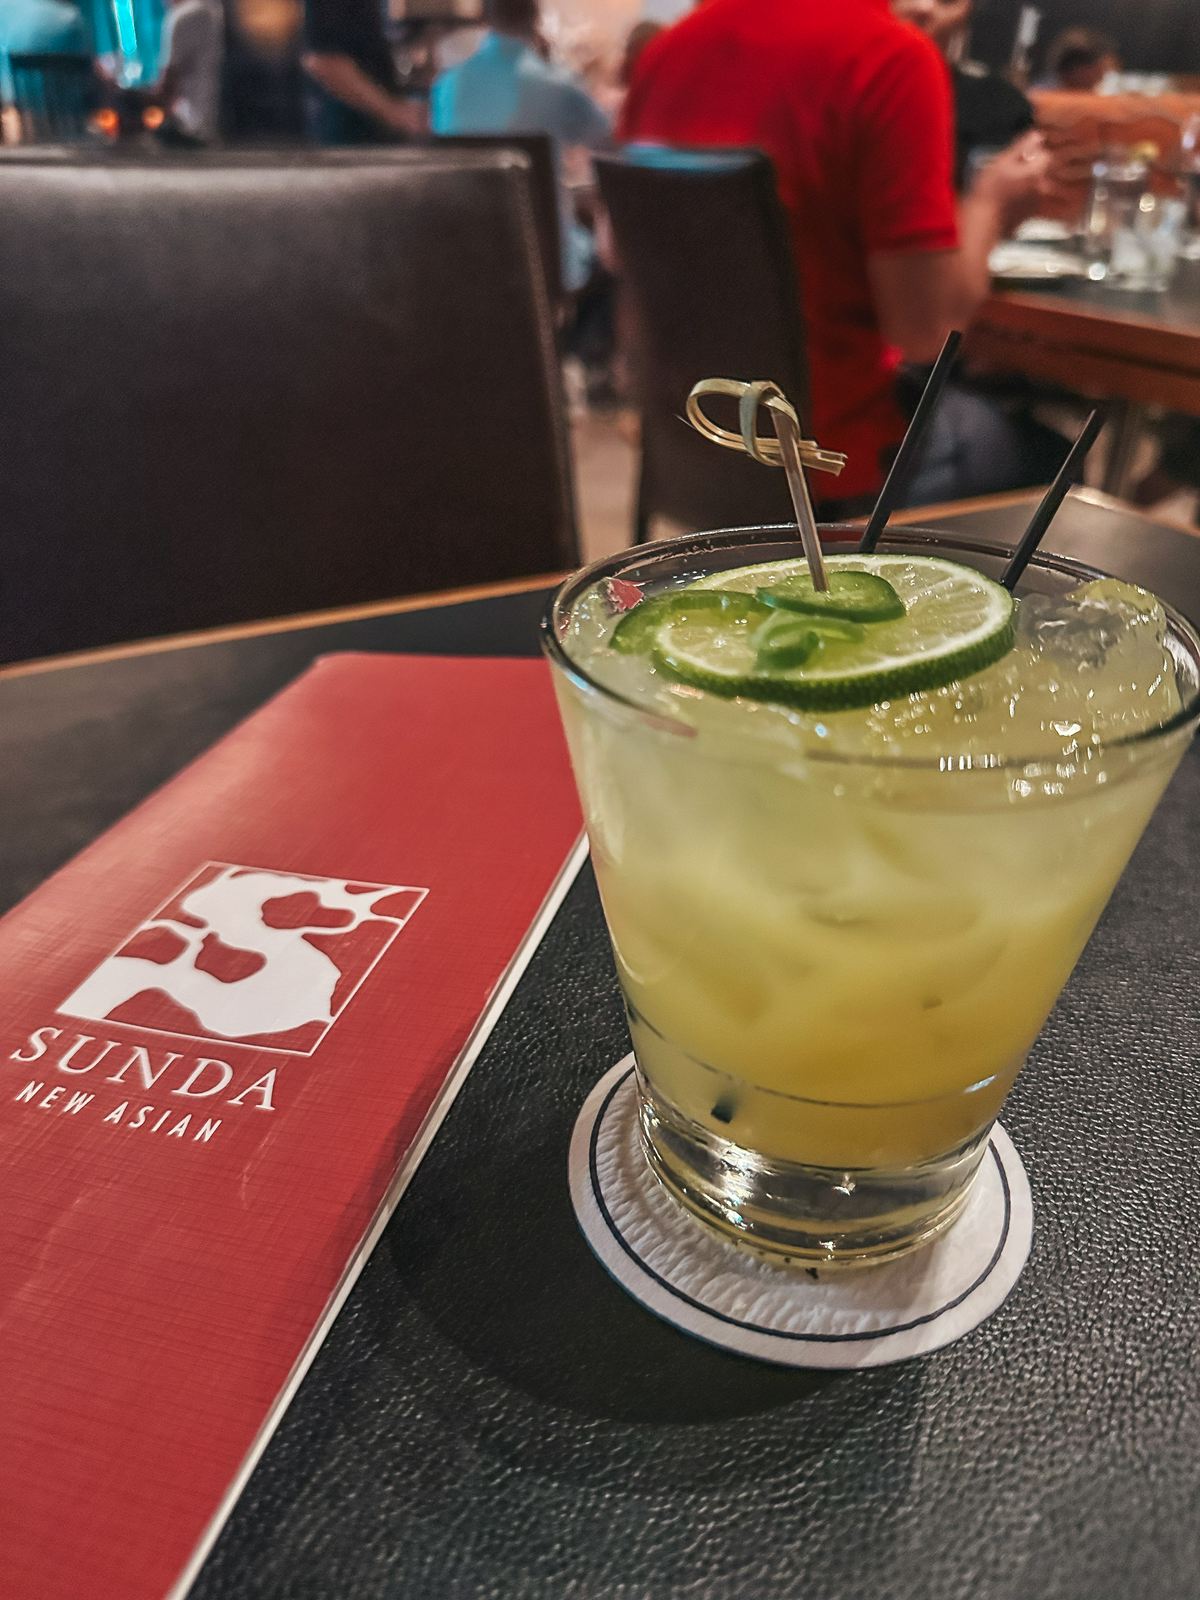 Sunda New Asian in Chicago cocktail